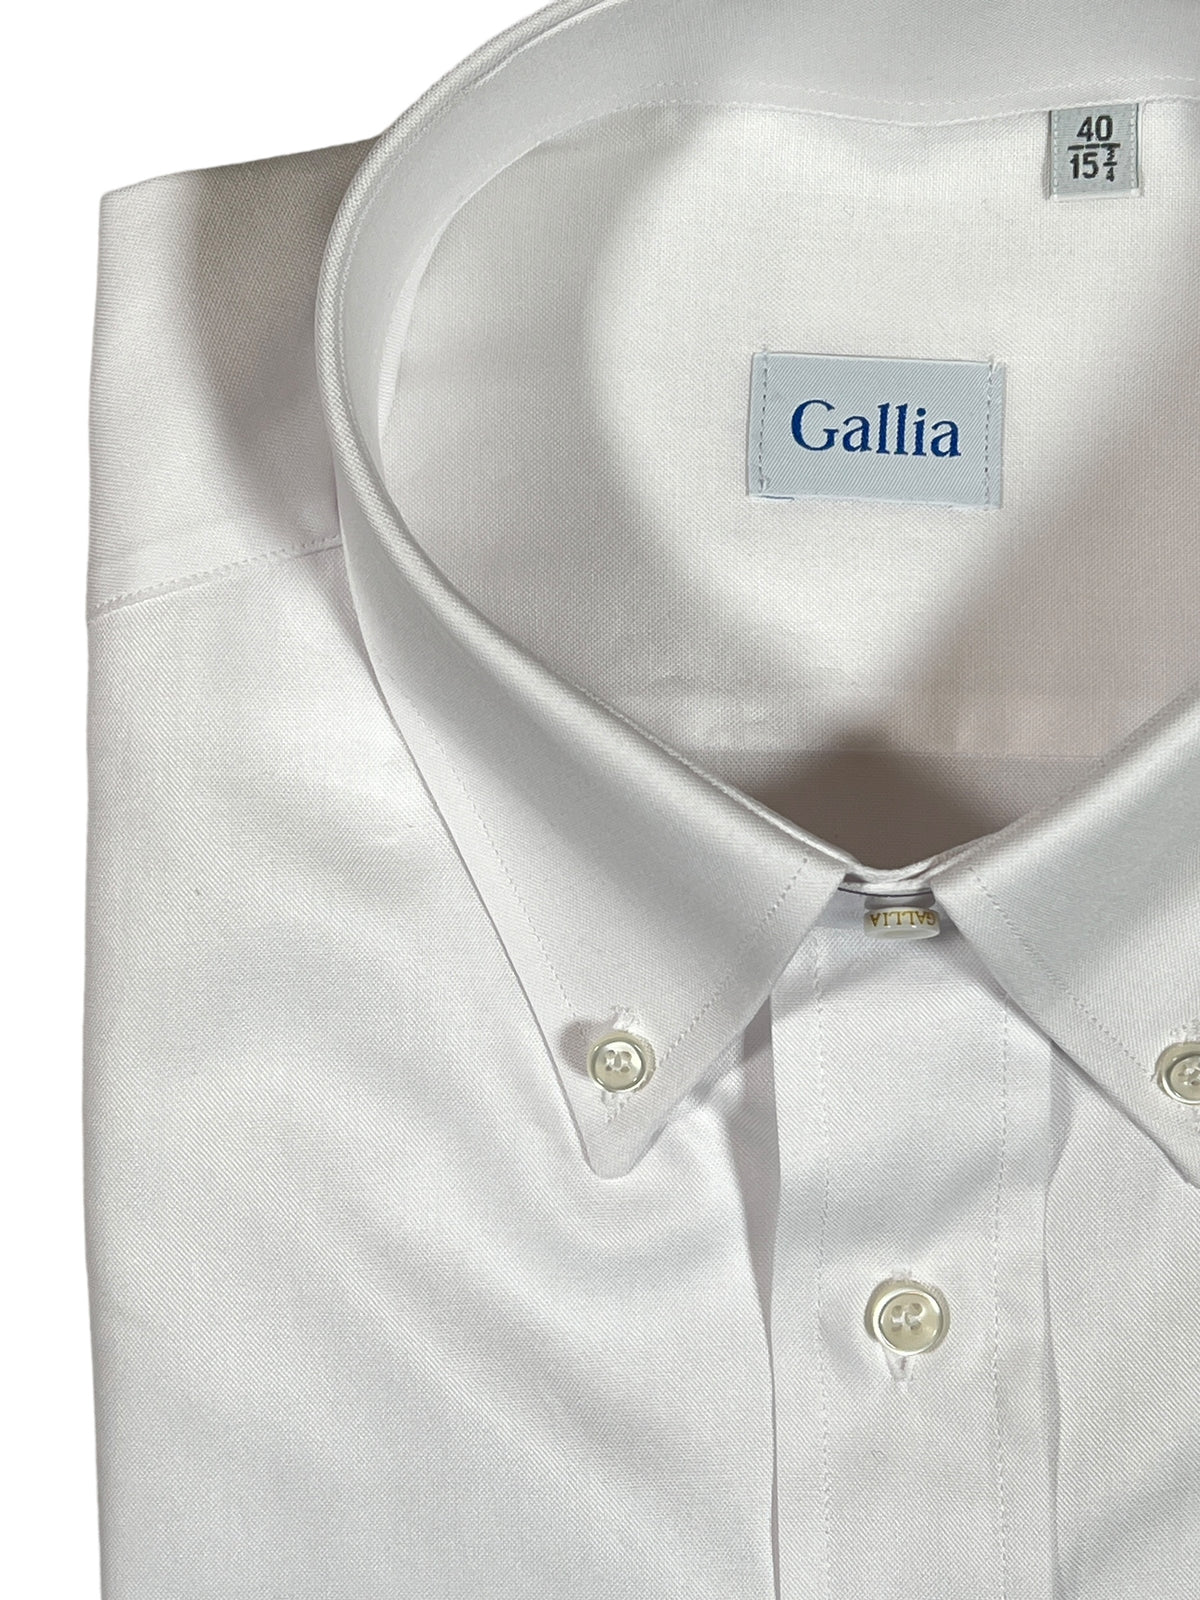 GALLIA MEN'S SHIRT - SOLID WHITE OXFORD